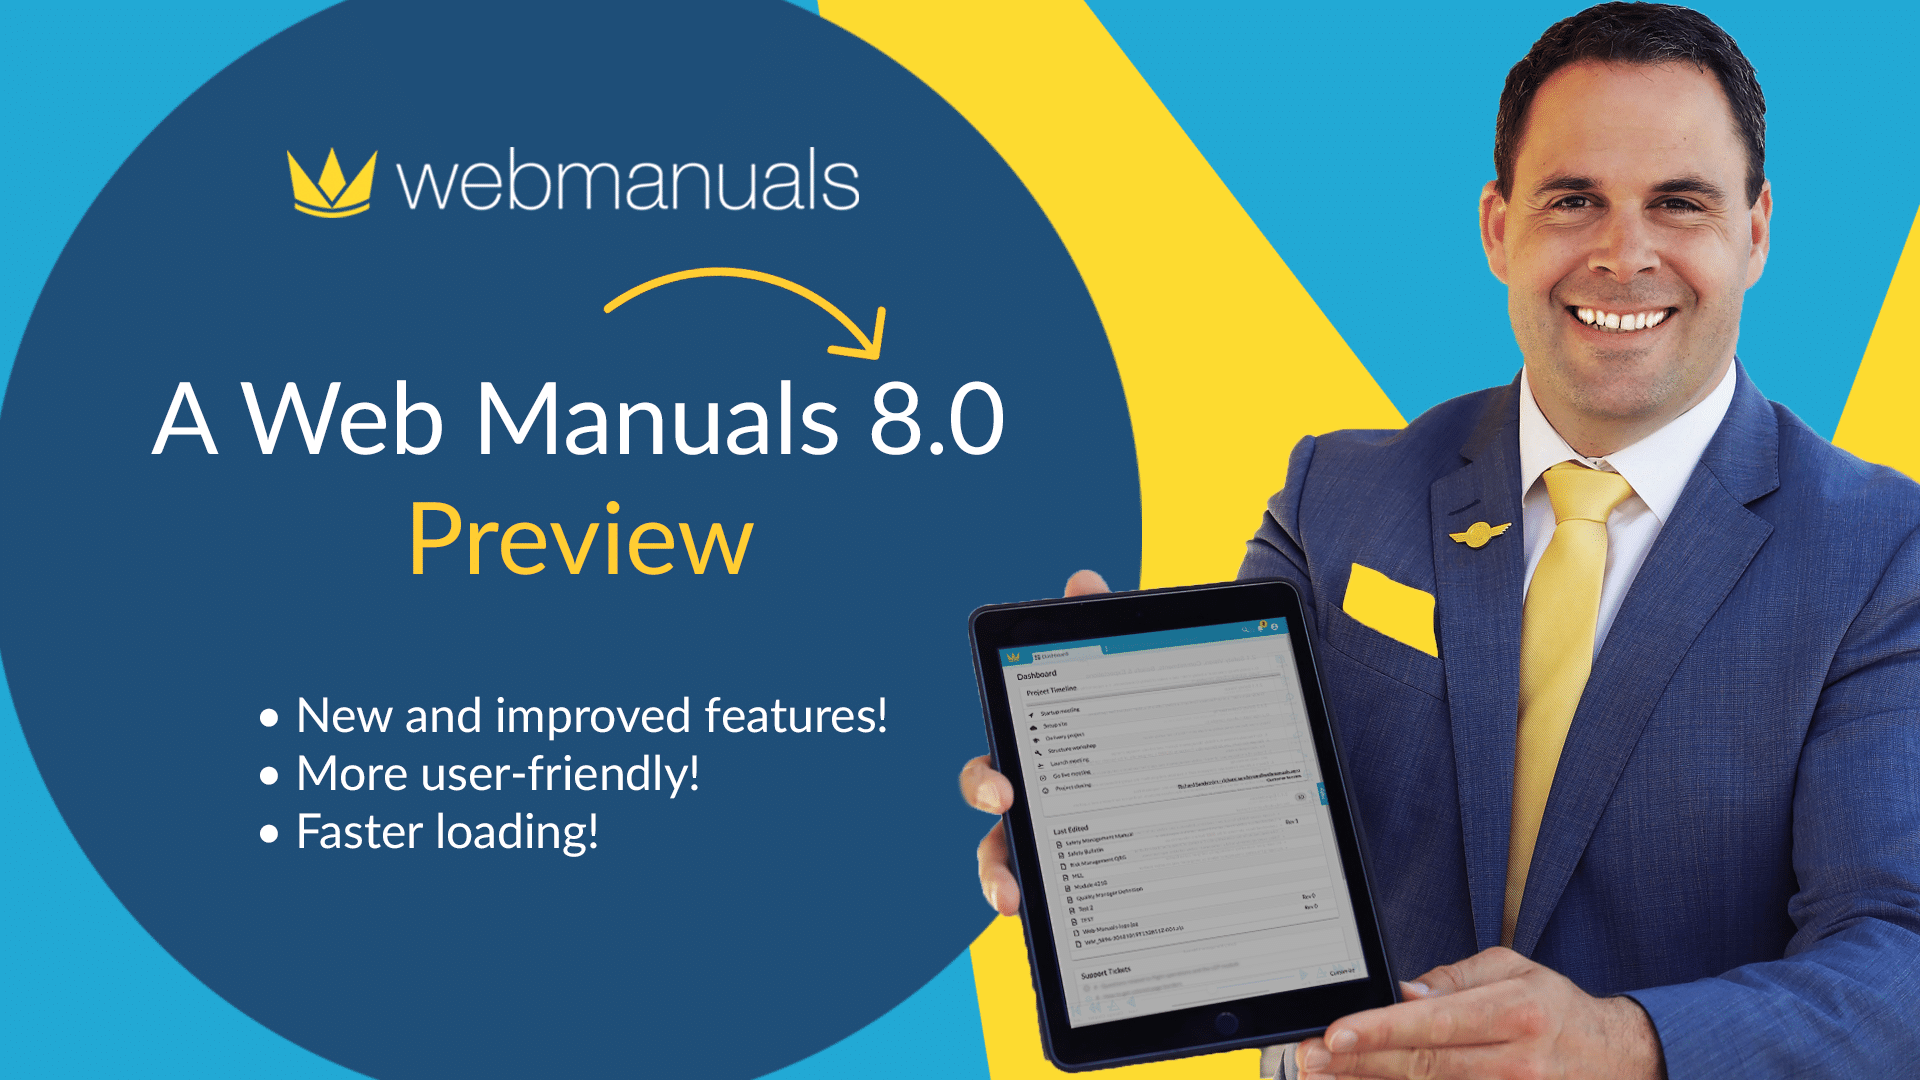 Web Manuals 8.0 martin holding ipad preview sneak peek